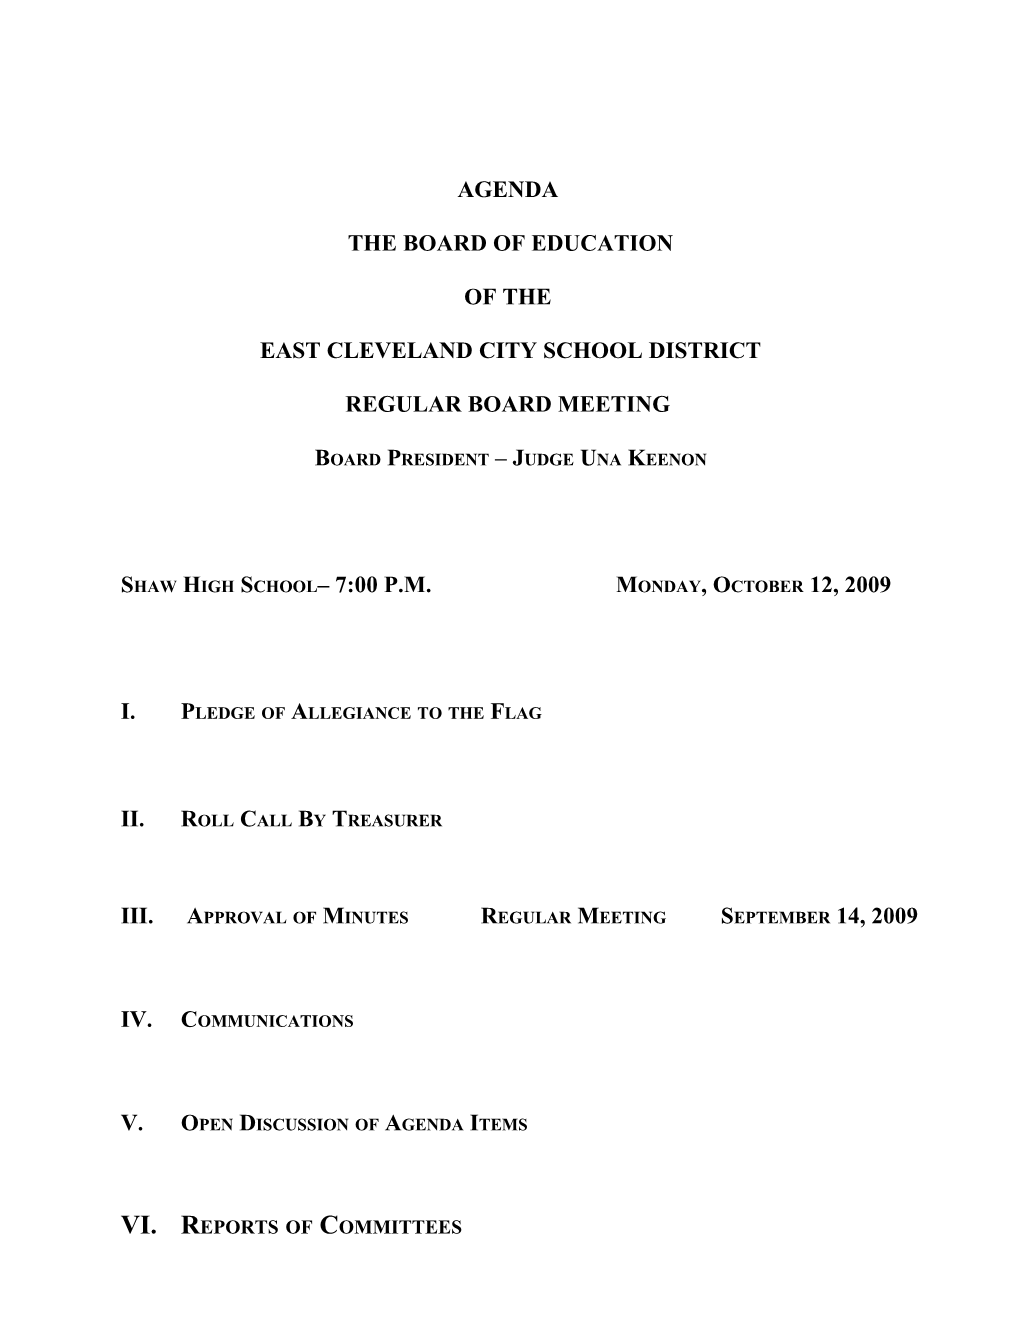 Judge Una Keenon - President East Cleveland City School District s1